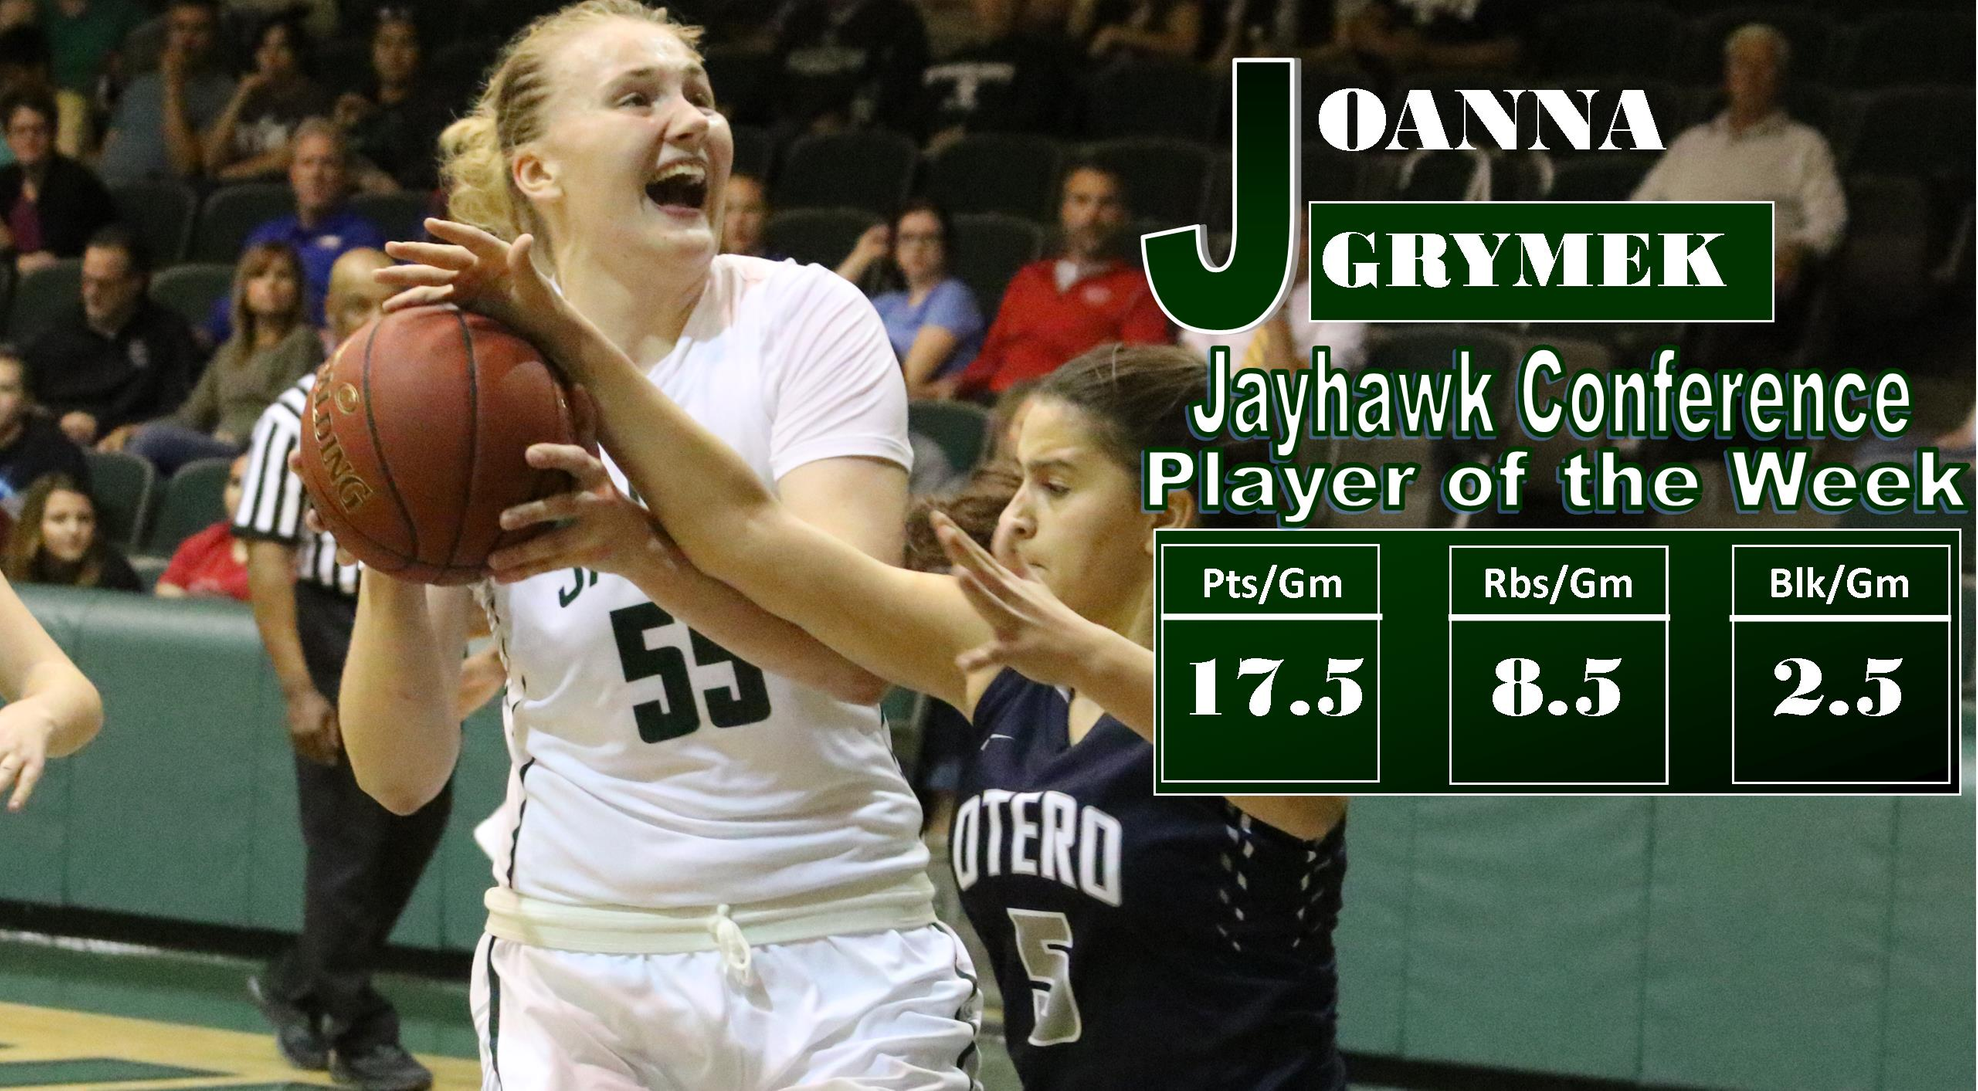 Joanna Grymek Named Jayhawk Player of the Week